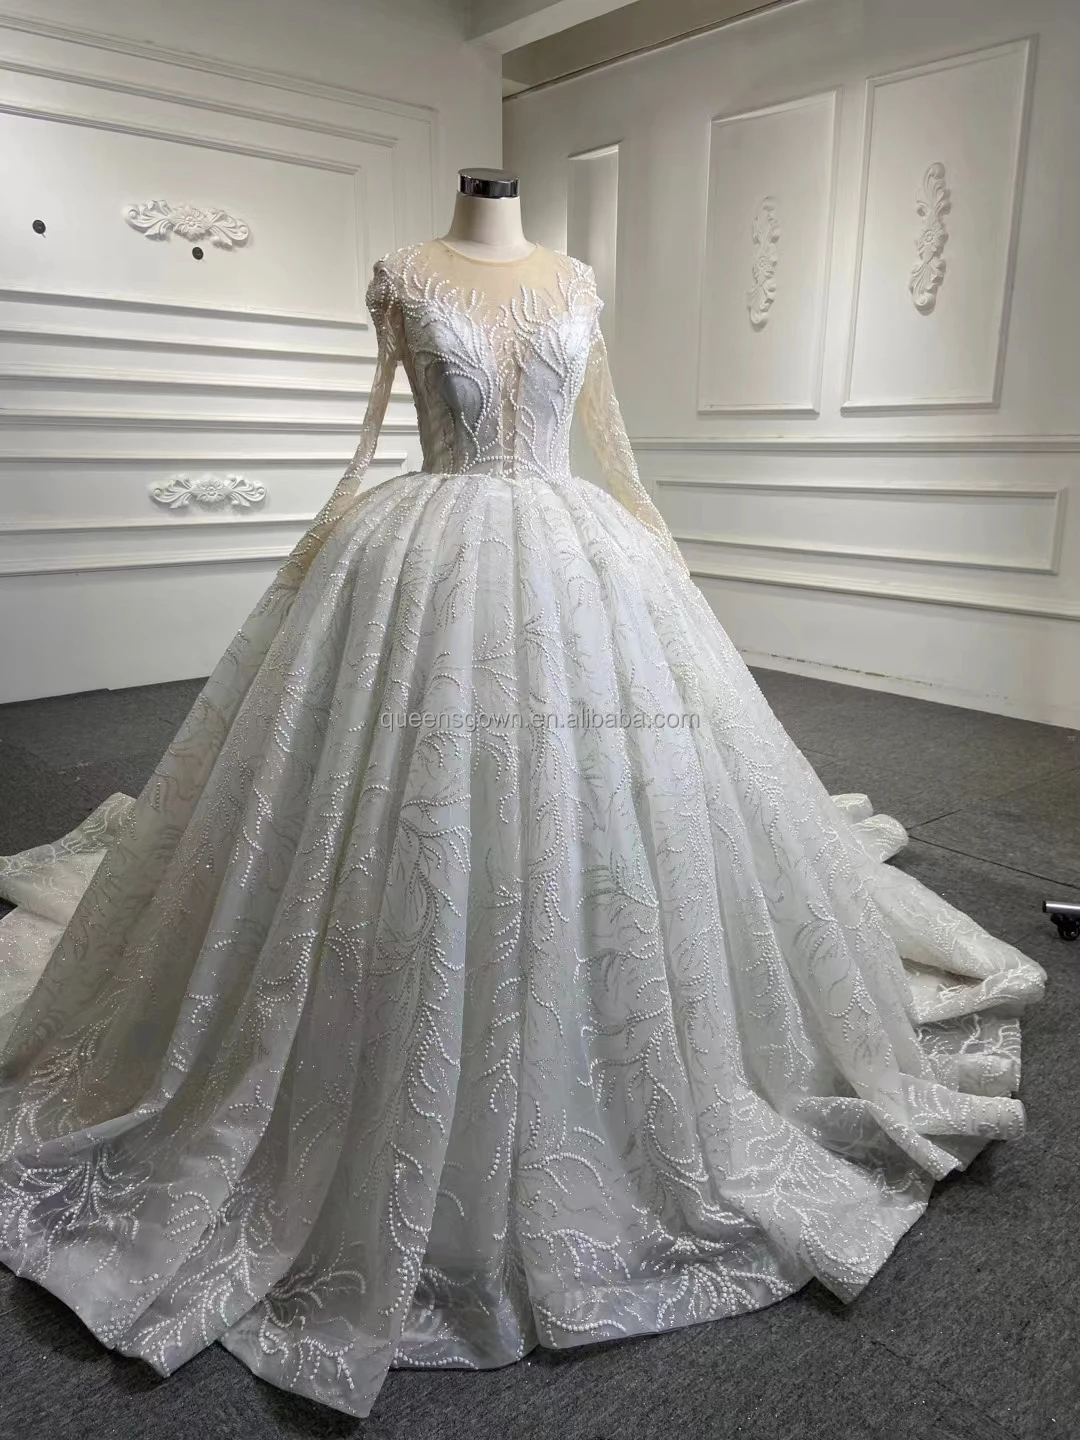 Queensgown Wholesale Long Sleeve Wedding Gown Luxury Wedding Ball Dress ...